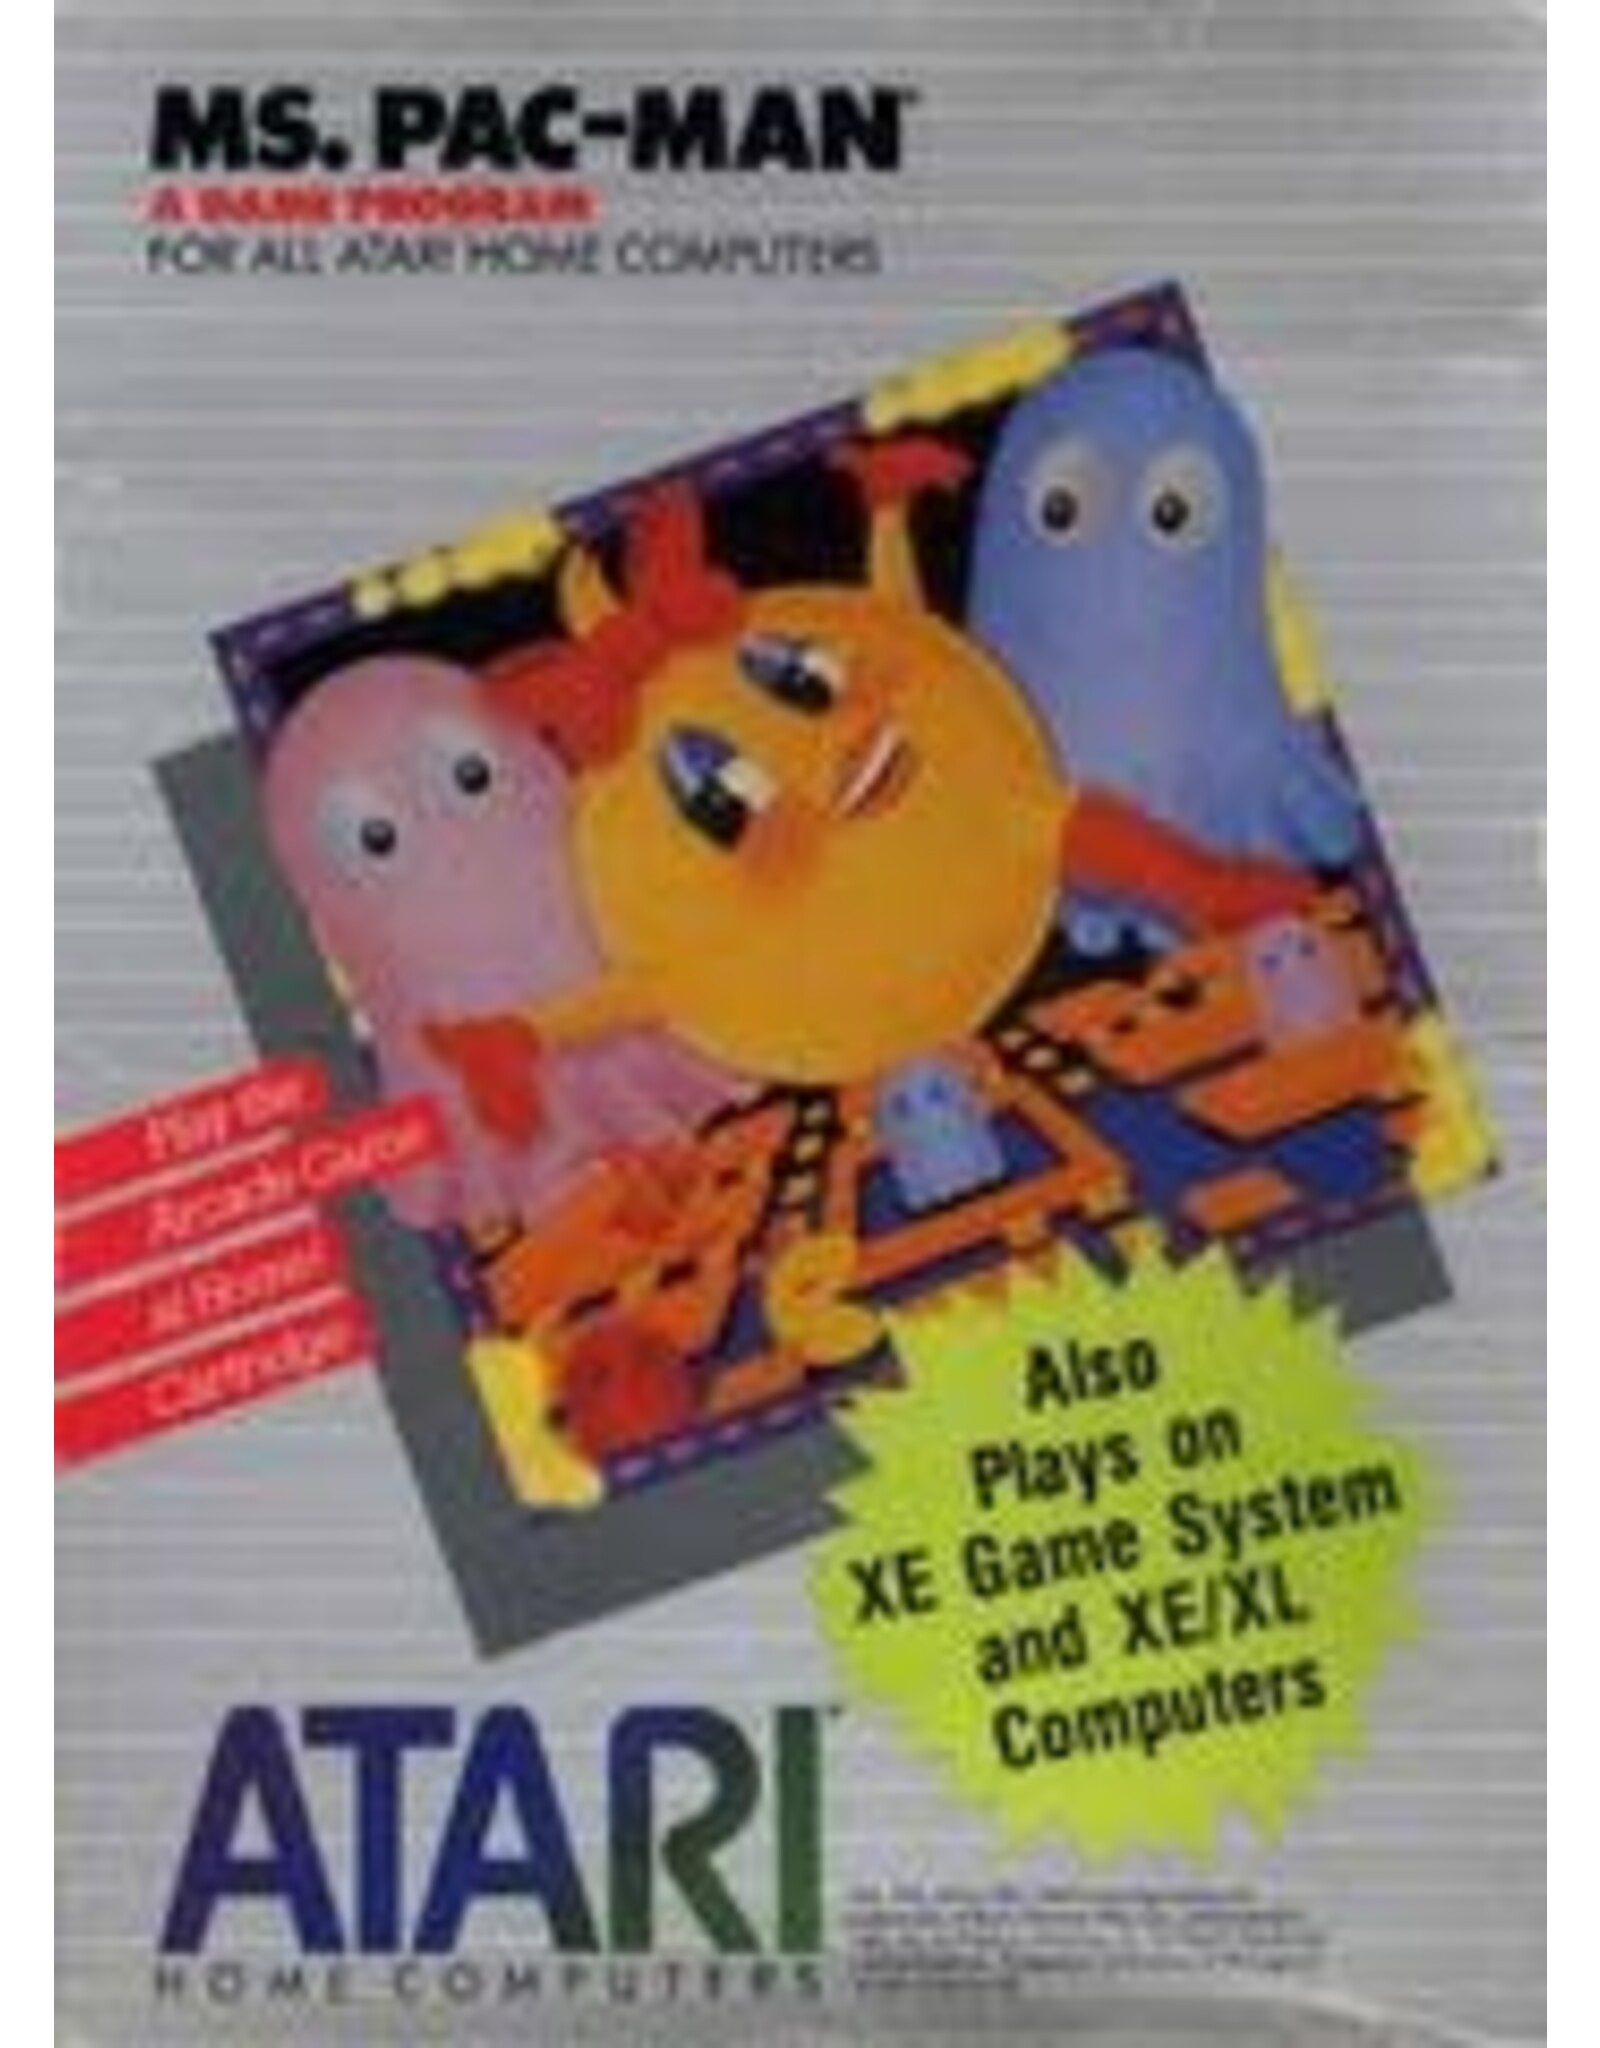 Atari 400 Ms. Pac-Man